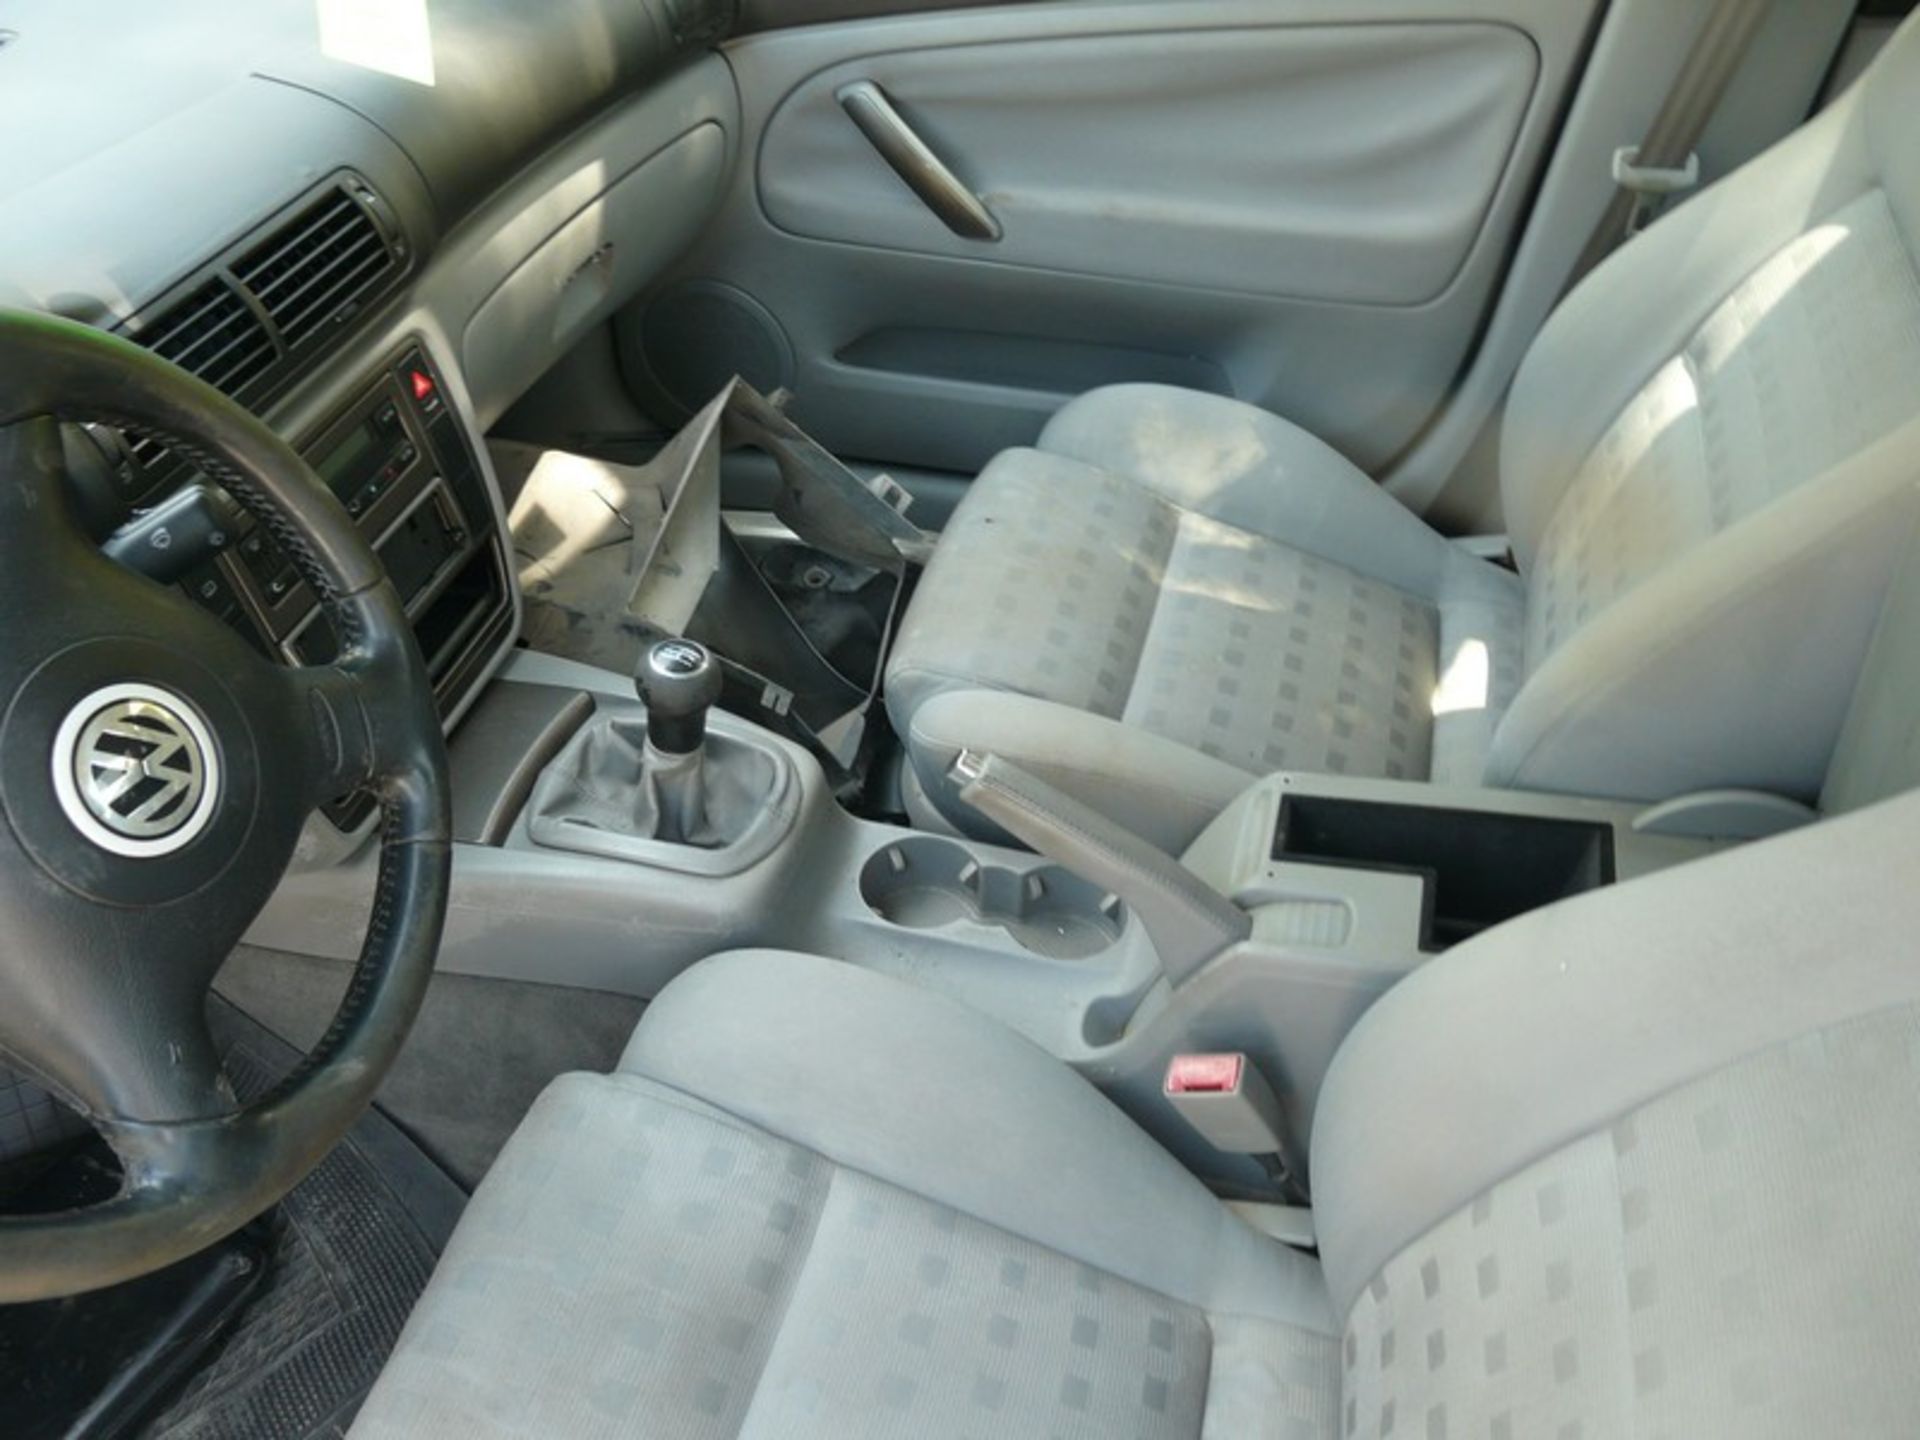 VW PASSAT 1.8 TURBO PETROL, 5 doors , REG: ZMA 4125 KM 373309, Small Damage, ALL spares are - Image 9 of 11